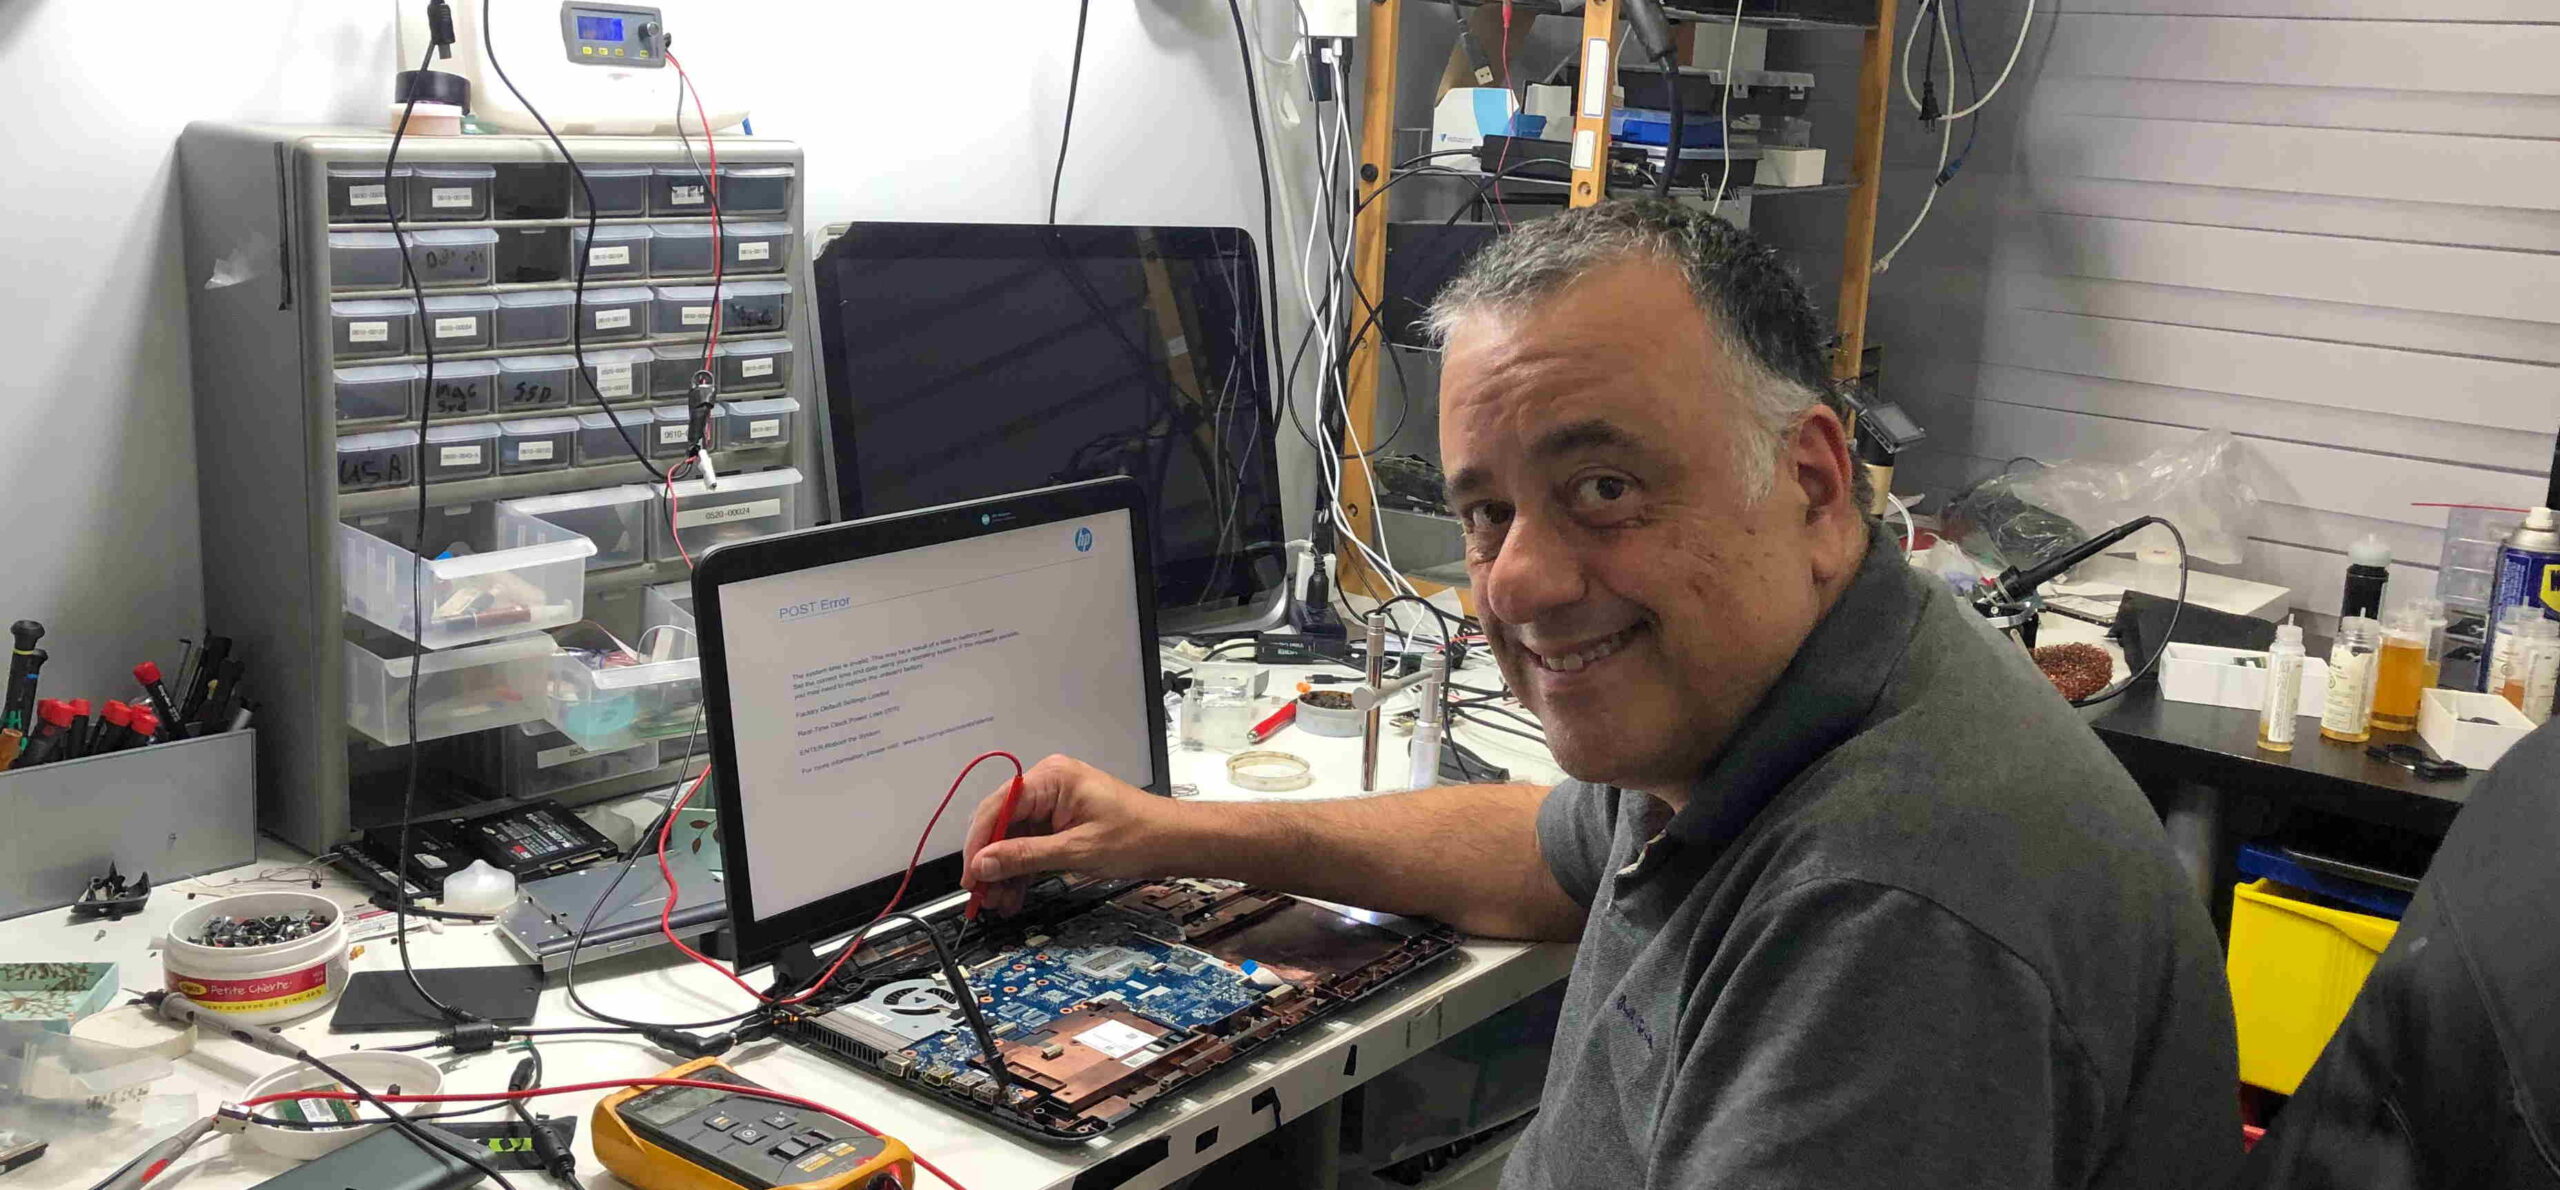 Laptop motherboards repair in montreal